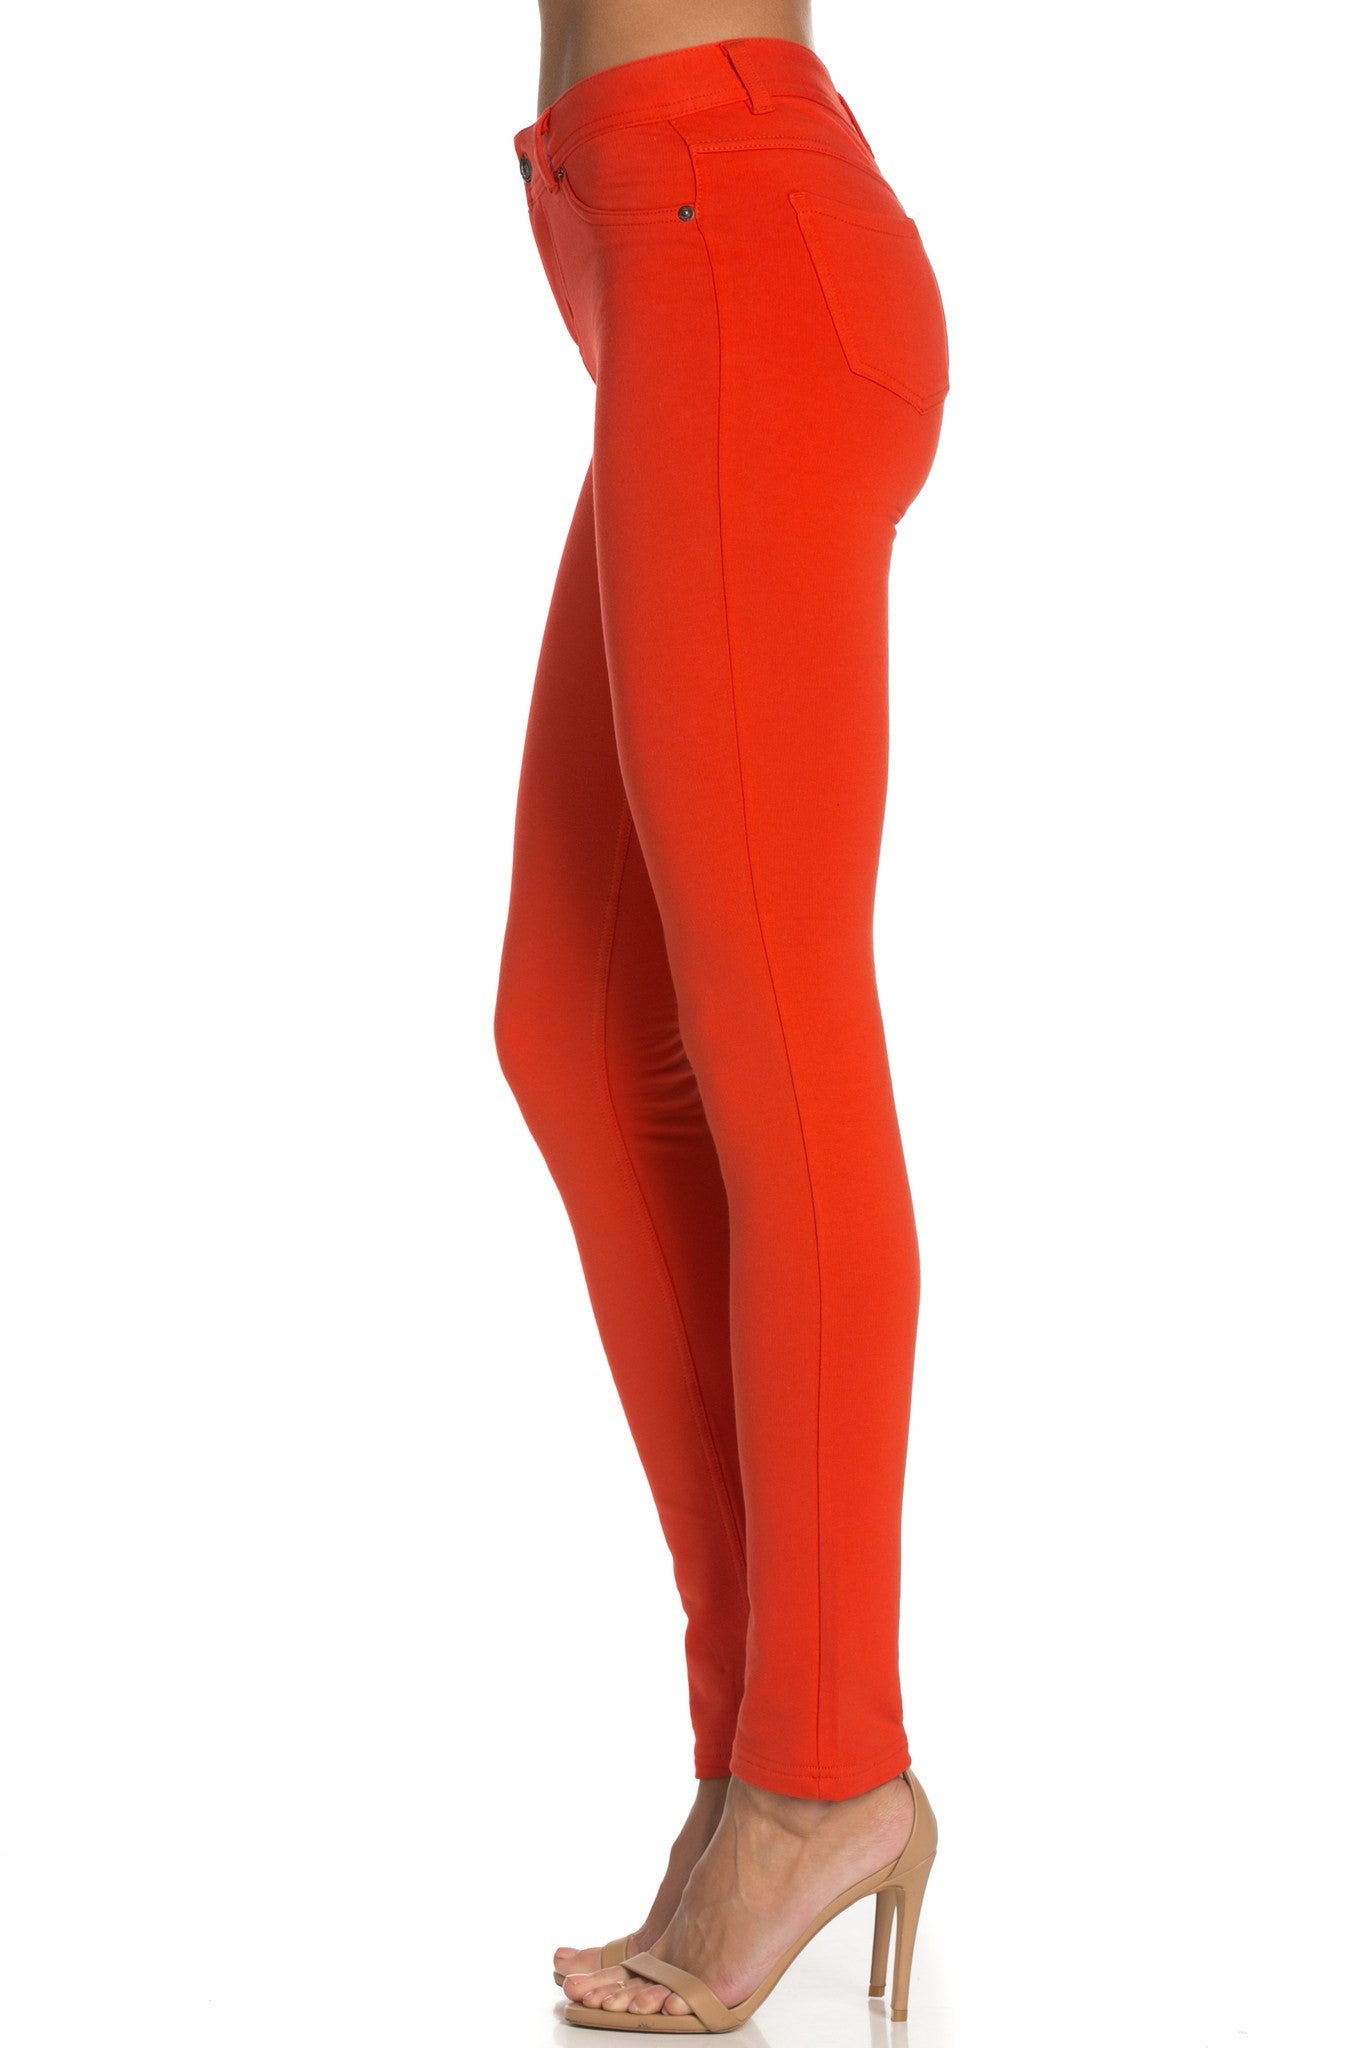 Stretch Skinny Knit Jegging Pants (Orange) - Poplooks